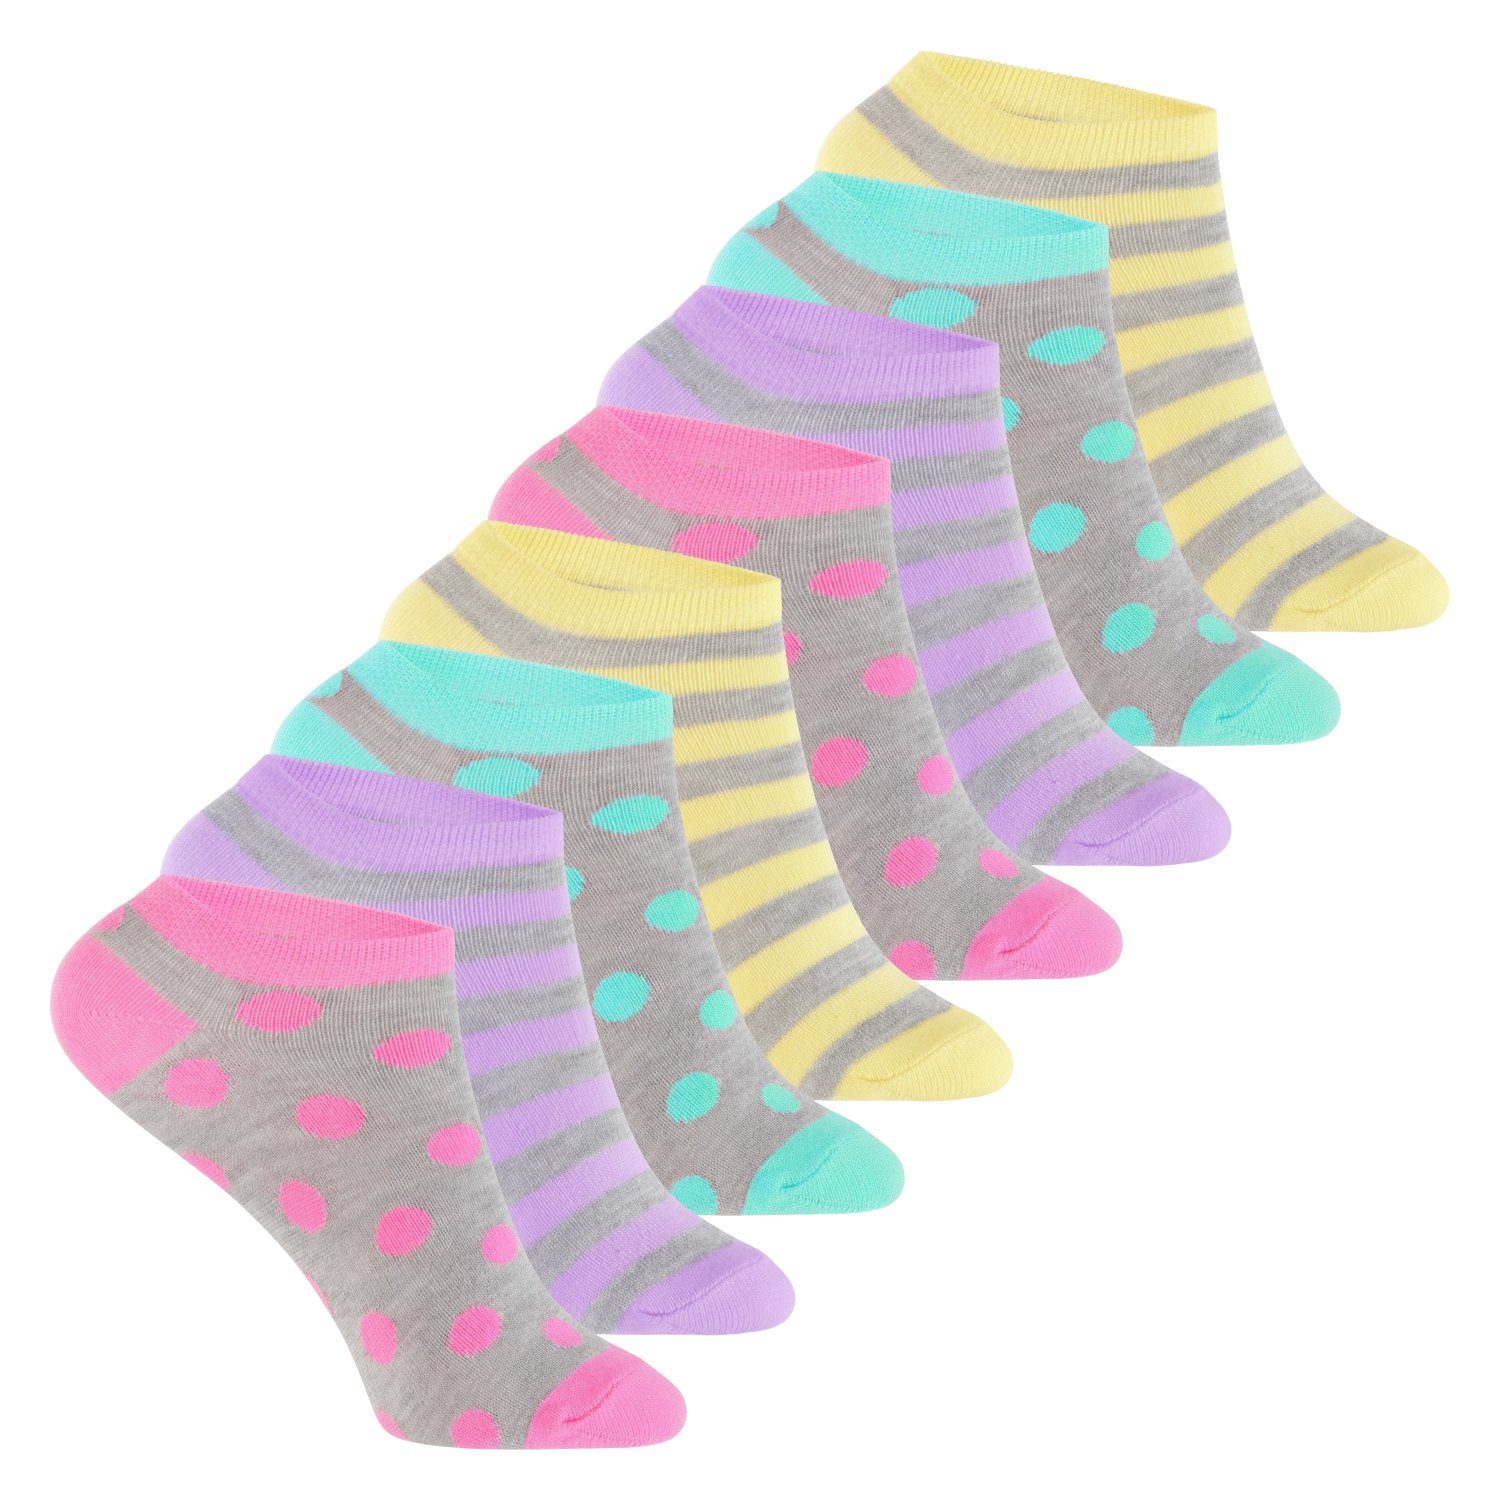 Footstar Kurzsocken Kinder Sneaker Socken (8 Paar) für Mädchen & Jungen, bunt Pastelltöne Mehrfarb-Pack